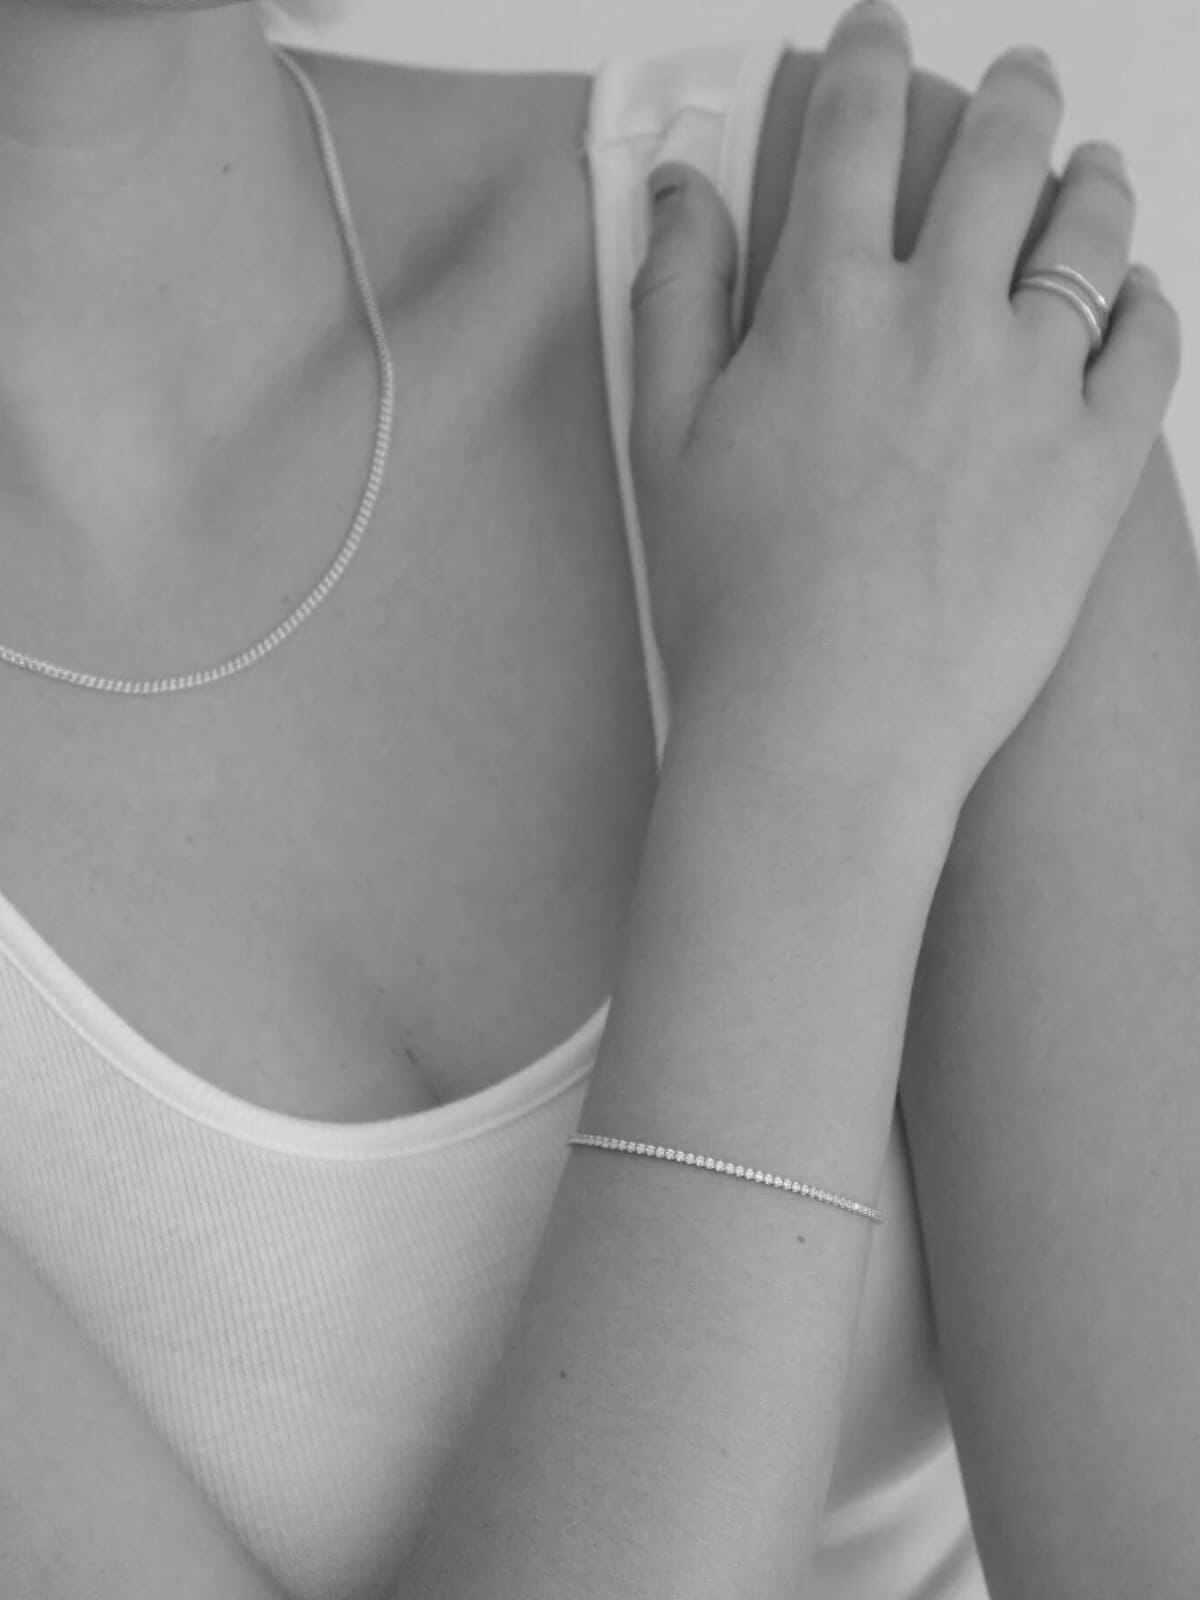 Brie Leon | CZ Tennis Bracelet - Silver | Perlu